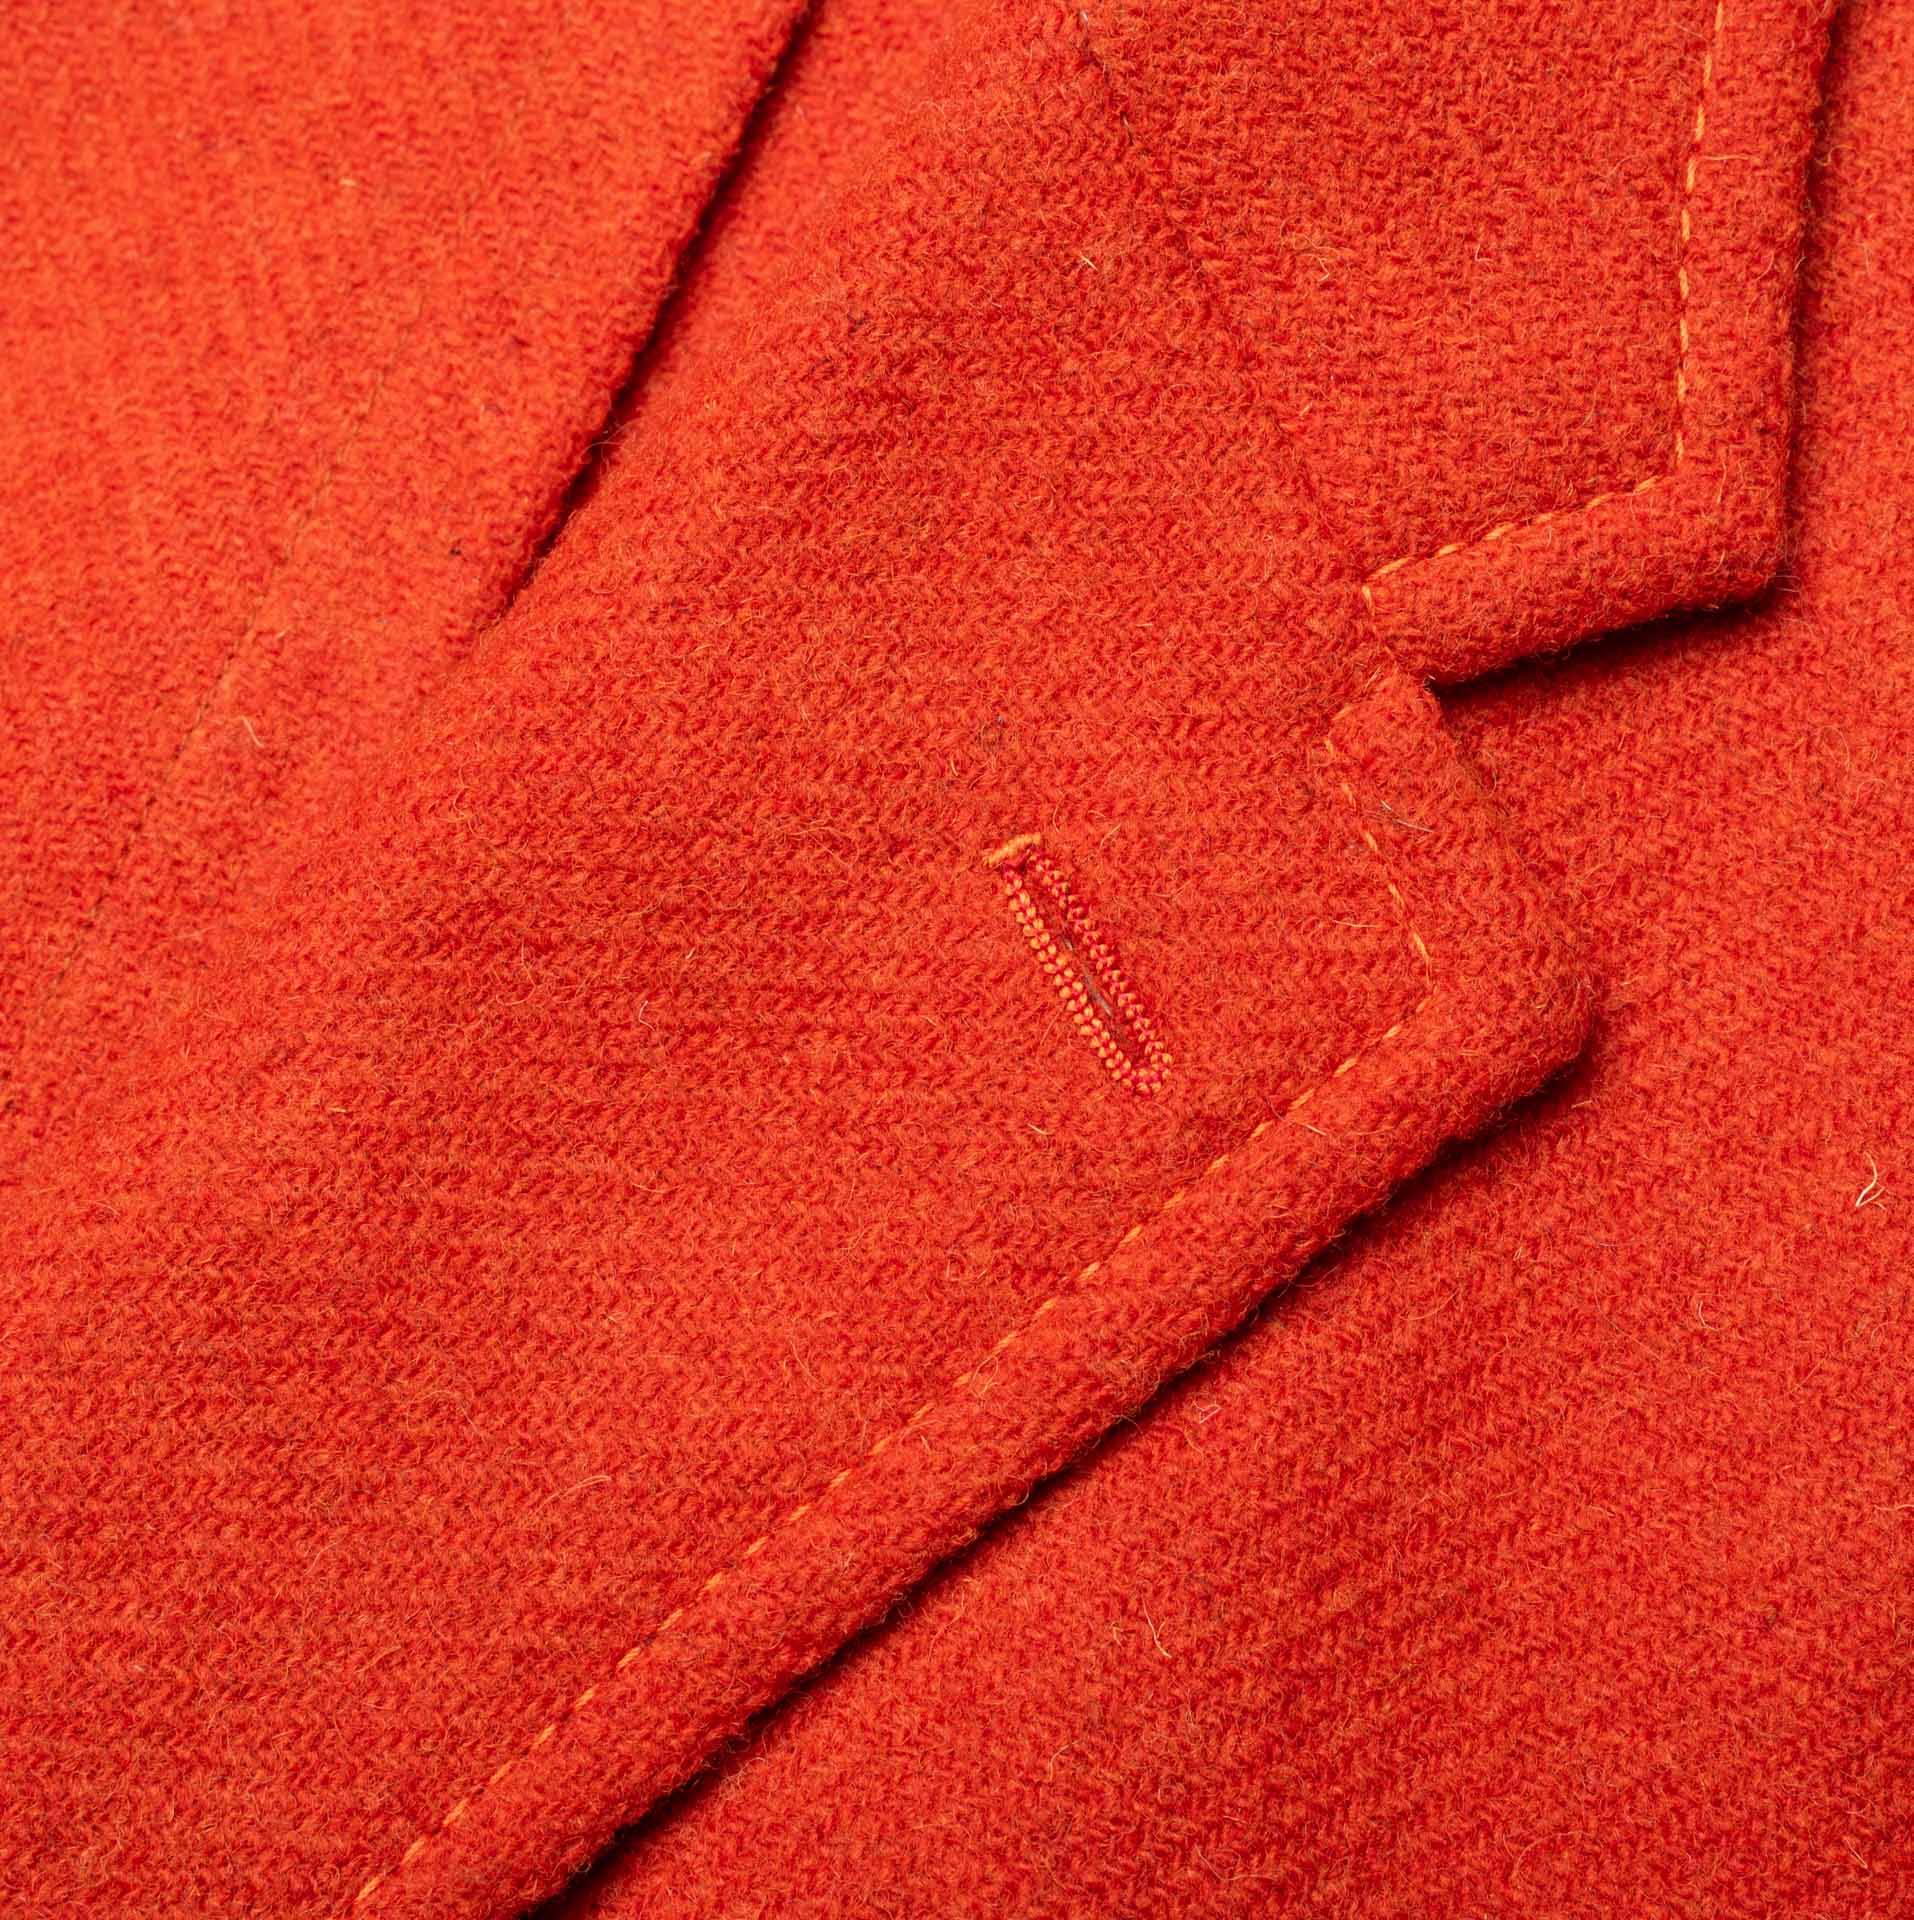 D'AVENZA Handmade Orange Wool Tweed Unlined Coat EU 48 NEW US 38 D'AVENZA